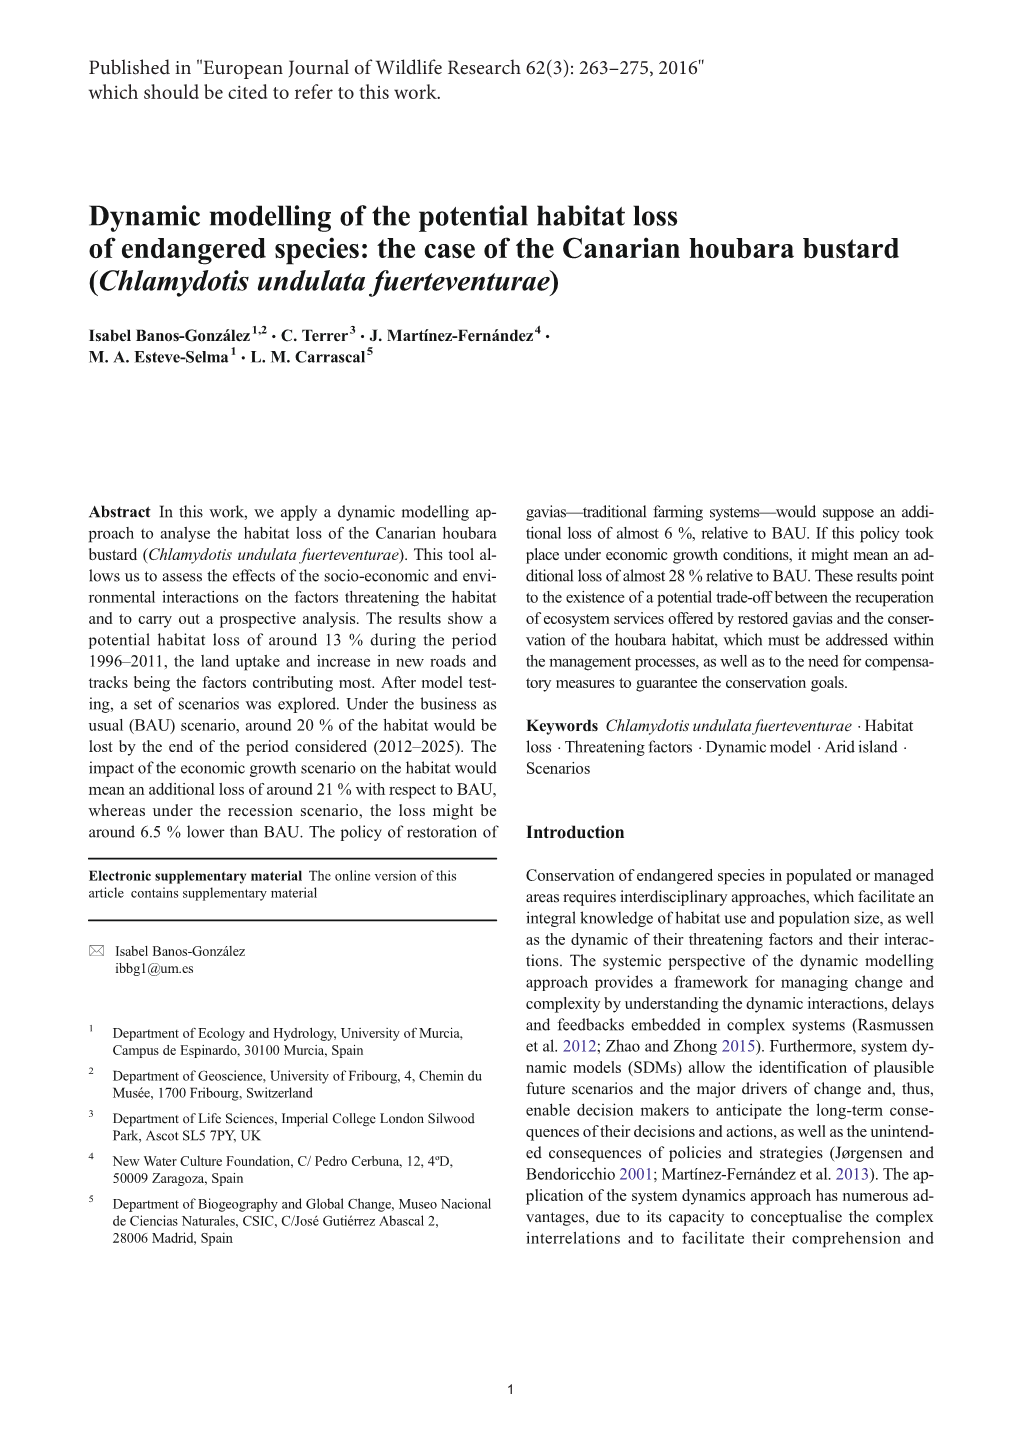 The Case of the Canarian Houbara Bustard (Chlamydotis Undulata Fuerteventurae)